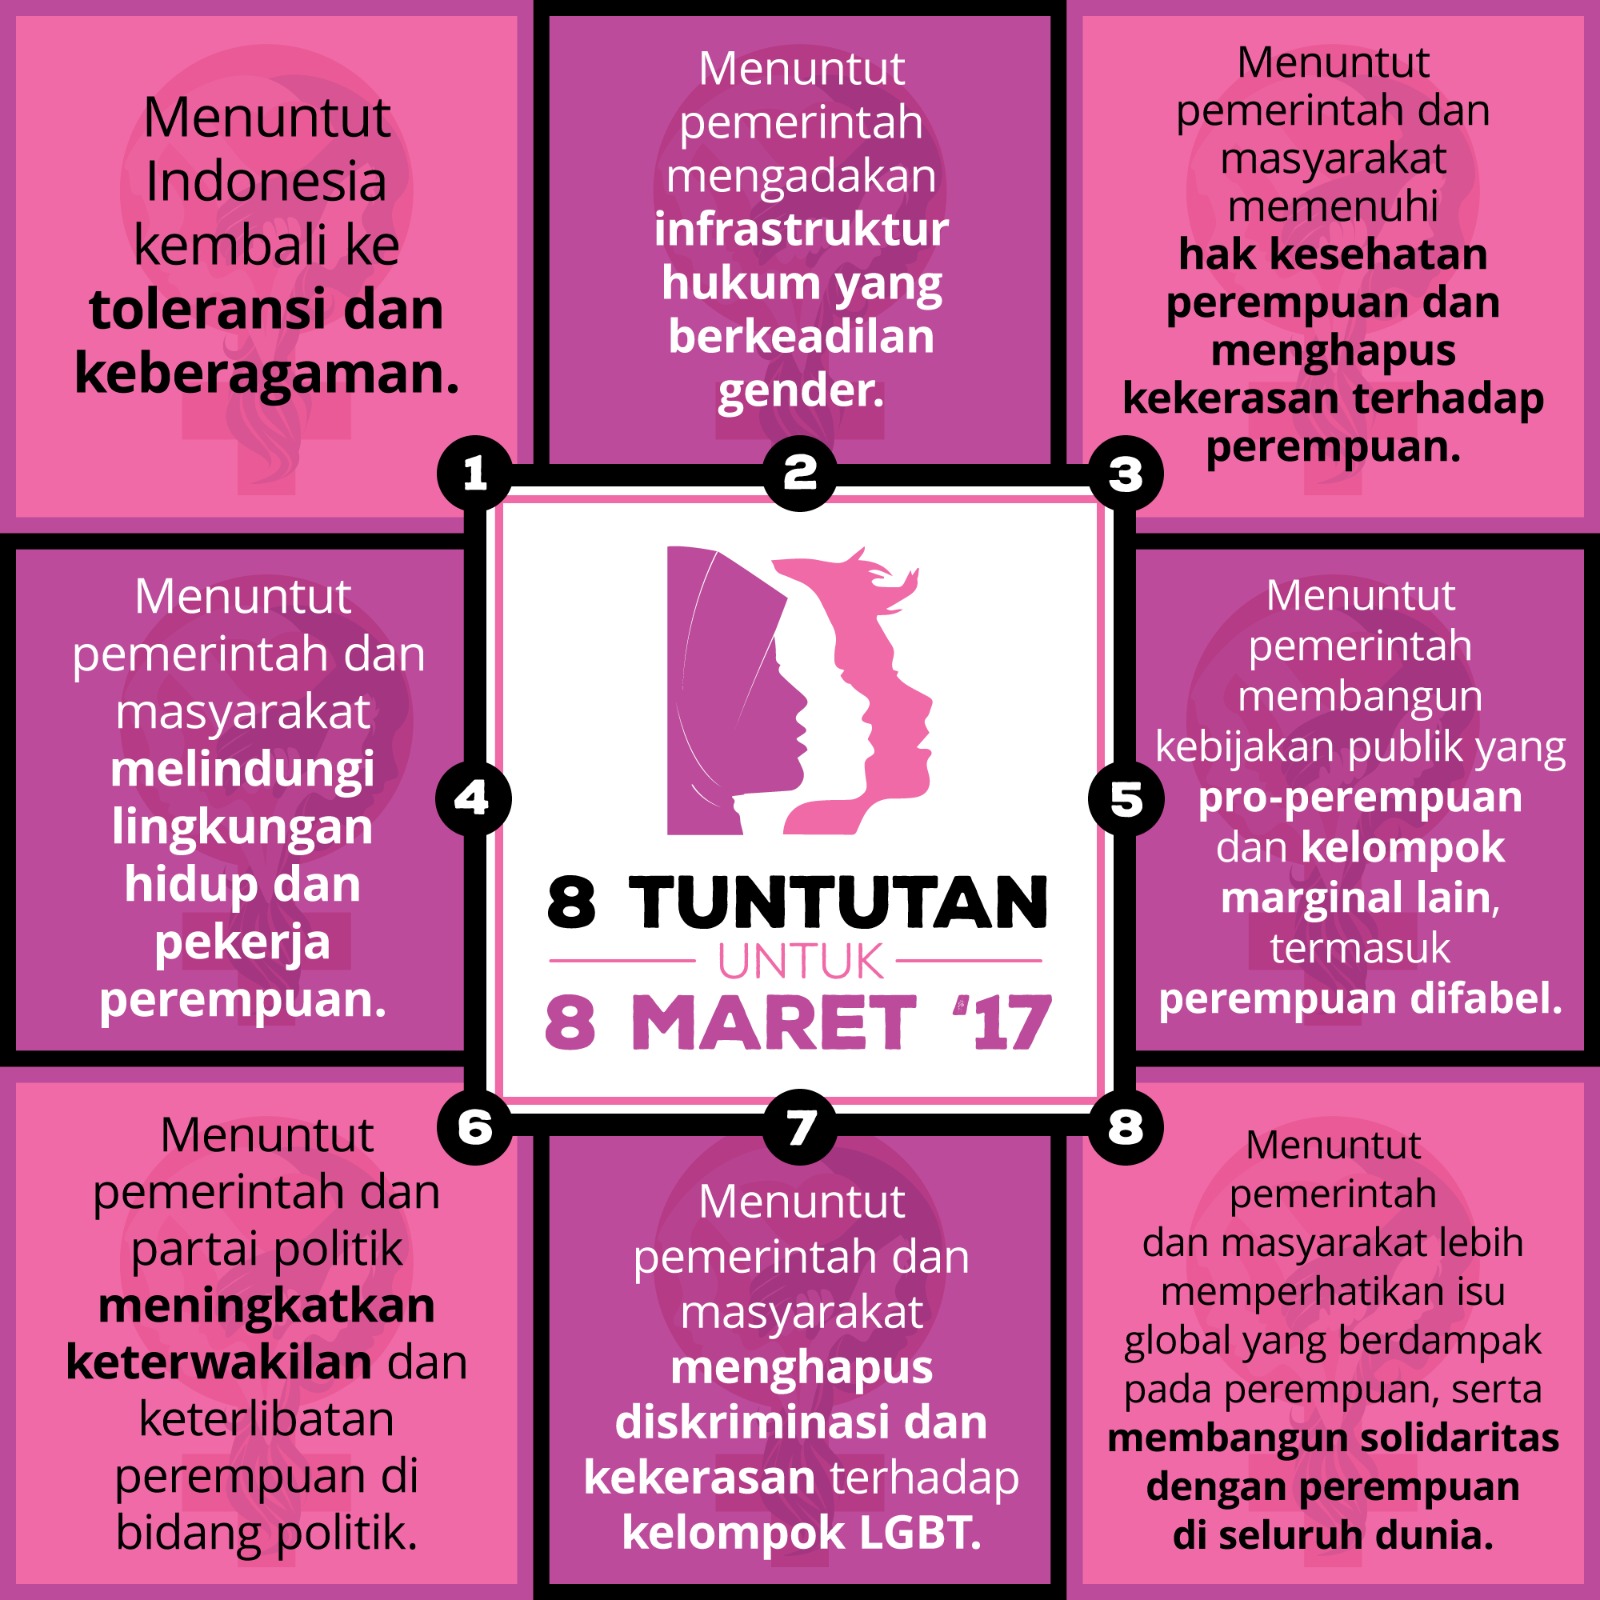 Tuntutan Women’s March